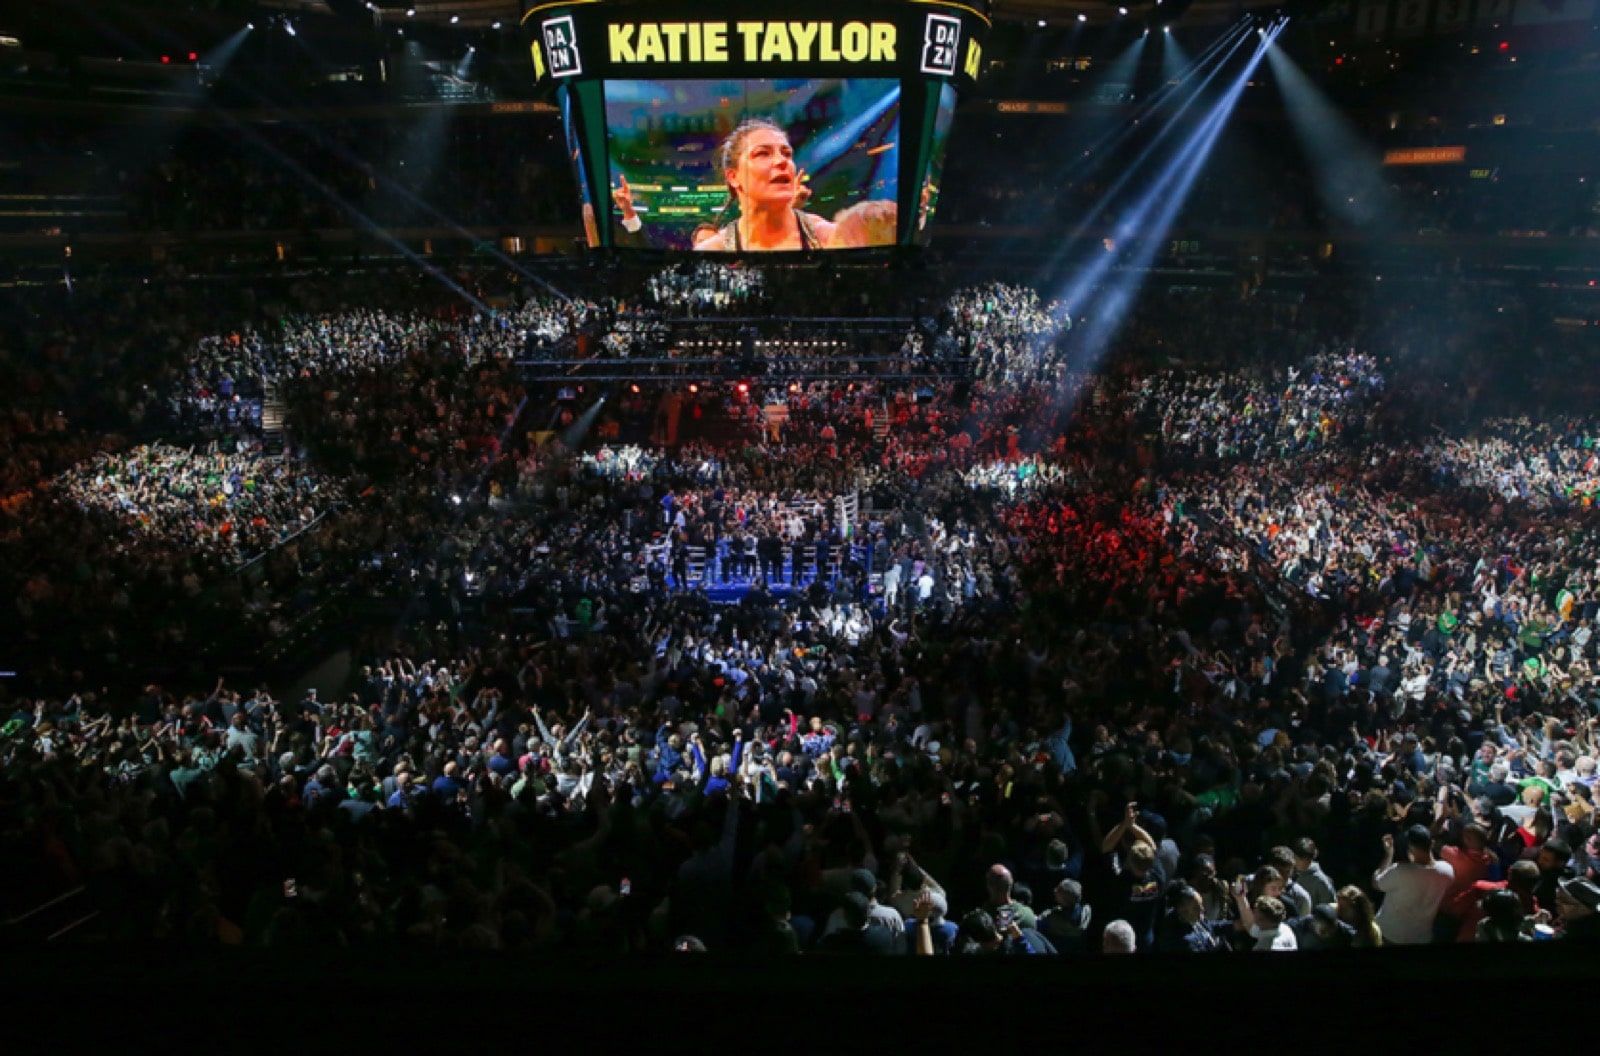 Amanda Serrano, Katie Taylor boxing image / photo